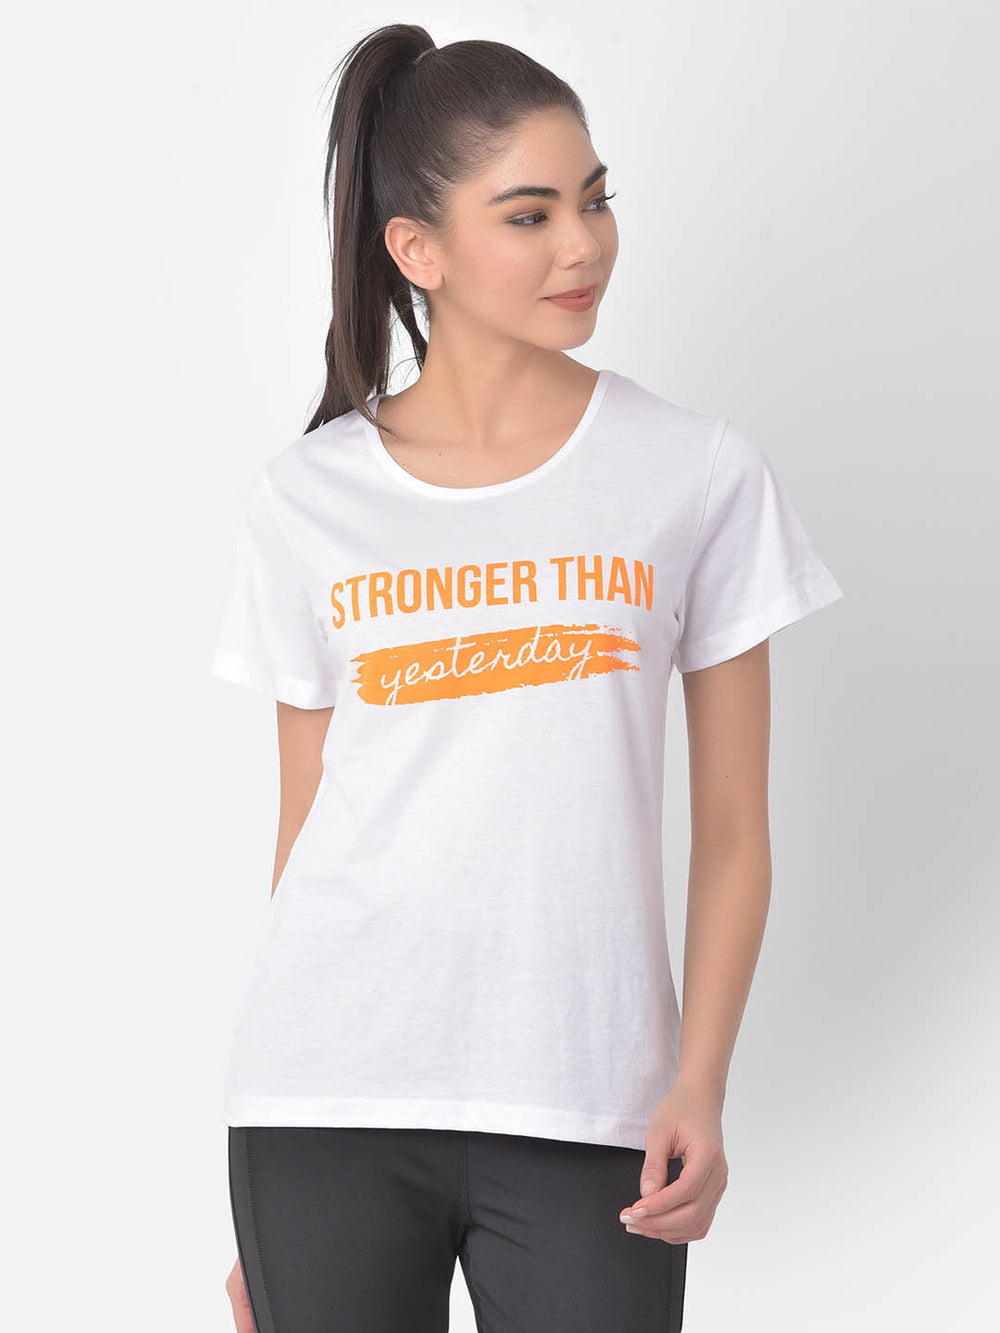 White Comfort-Fit Active Text Print T-Shirt